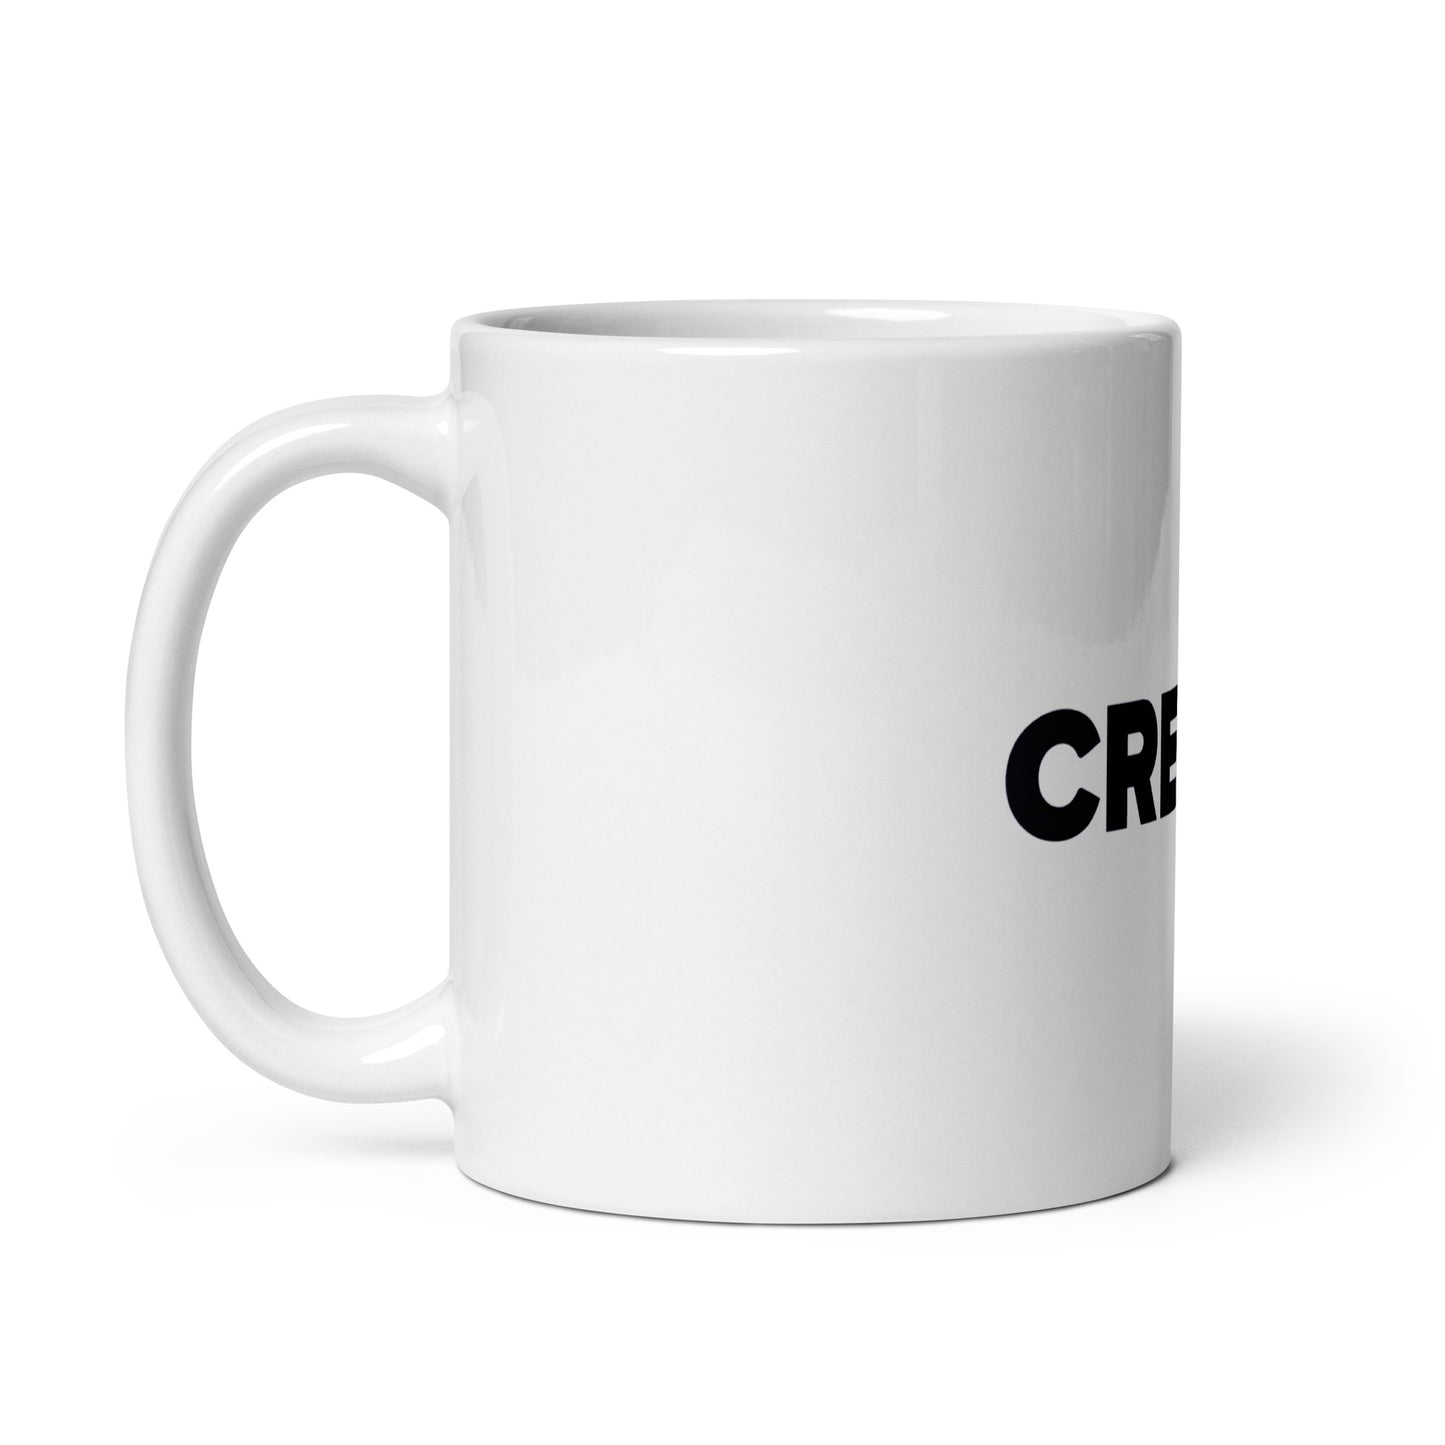 CRE Daily Coffee Mug